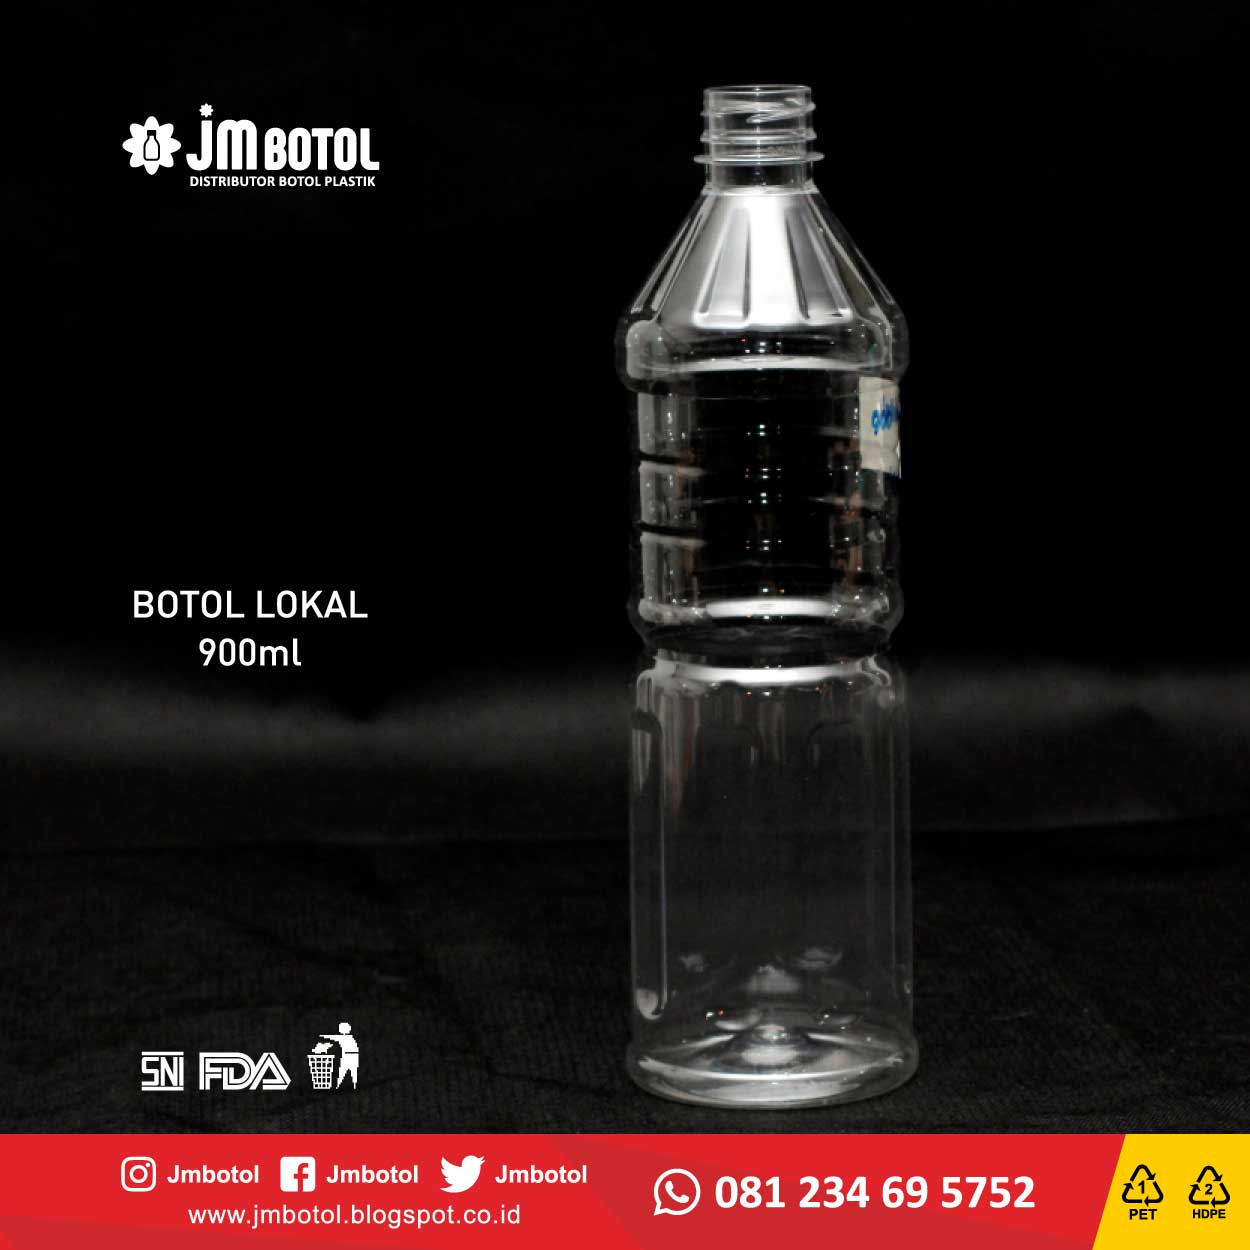 JM Botol  Distributor Pabrik Botol  Plastik  Murah Surabaya  